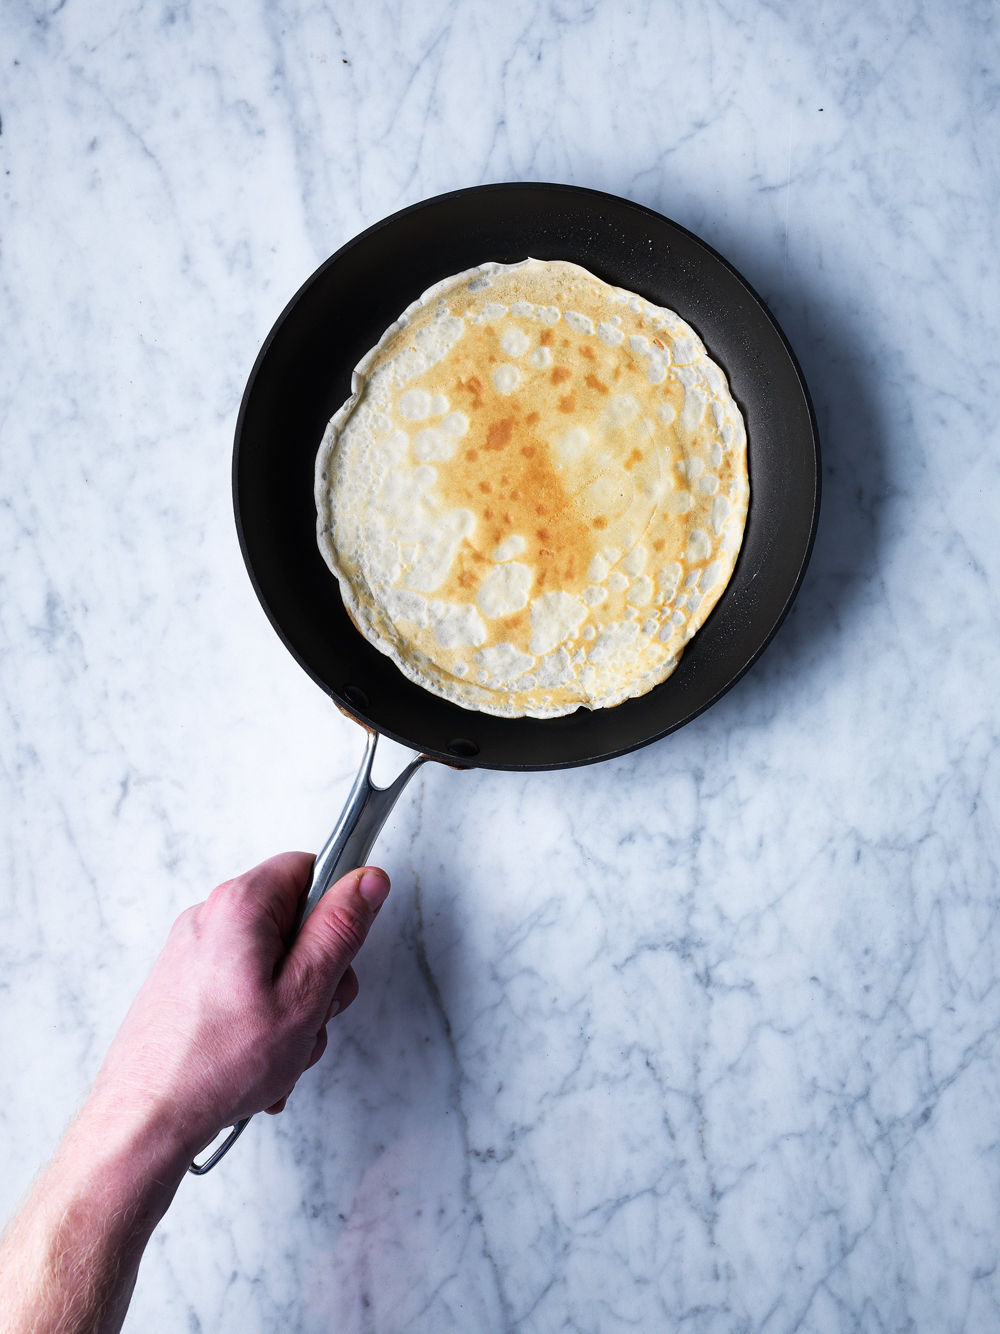 How to make flipping good pancakes